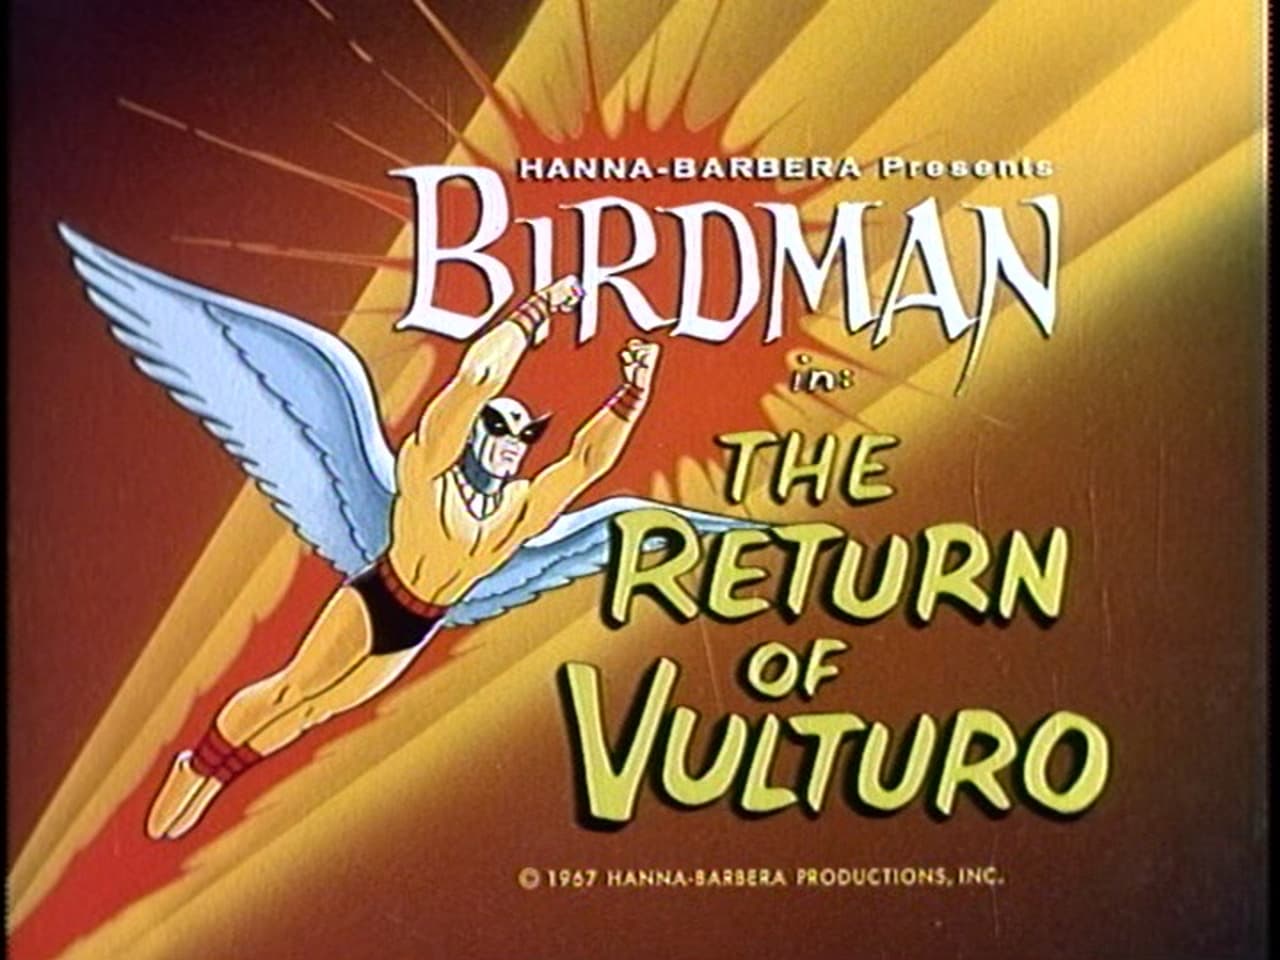 The Return of Vulturo